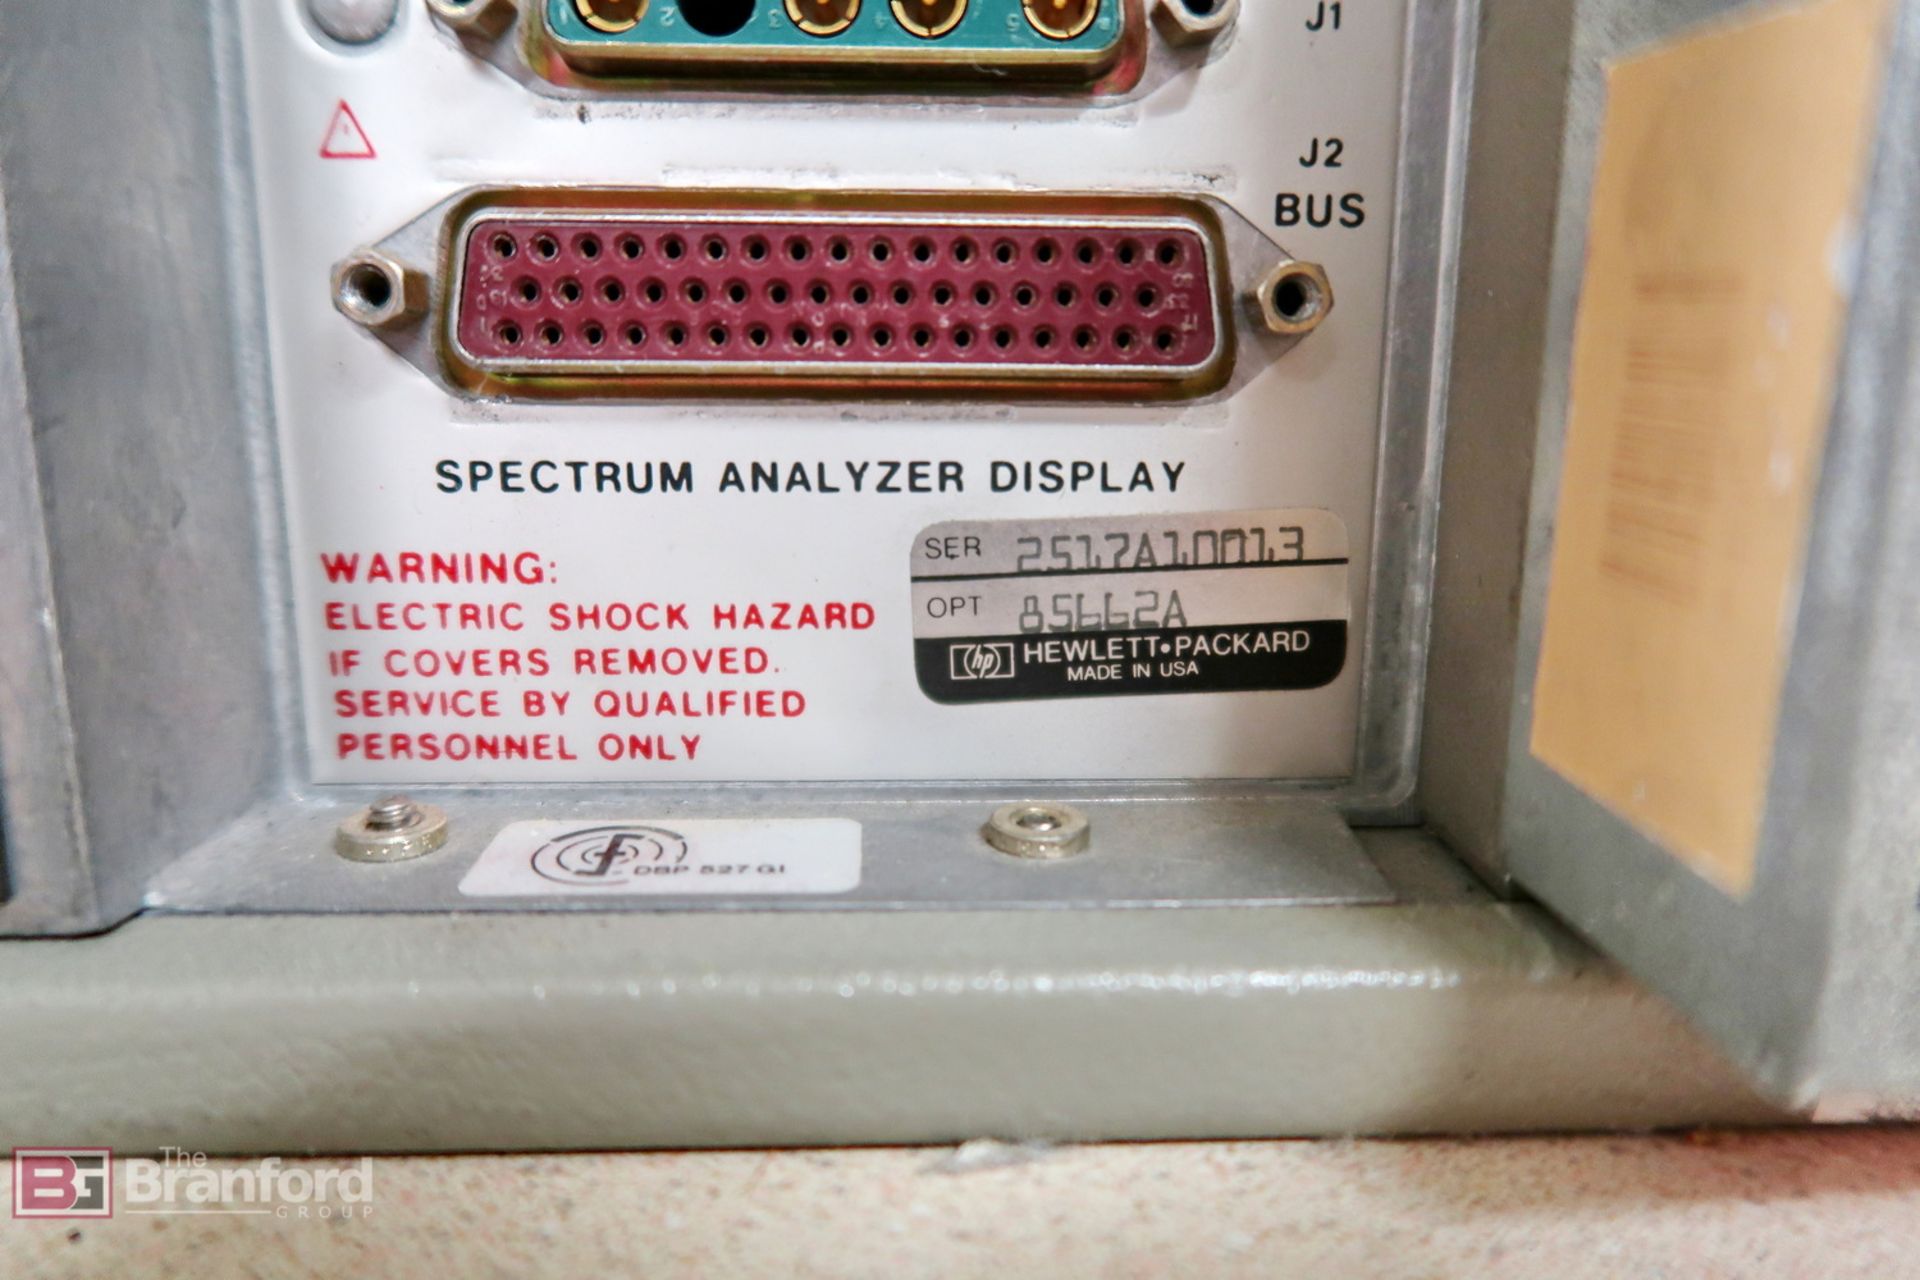 HP spectrum analyzer display - Image 3 of 3